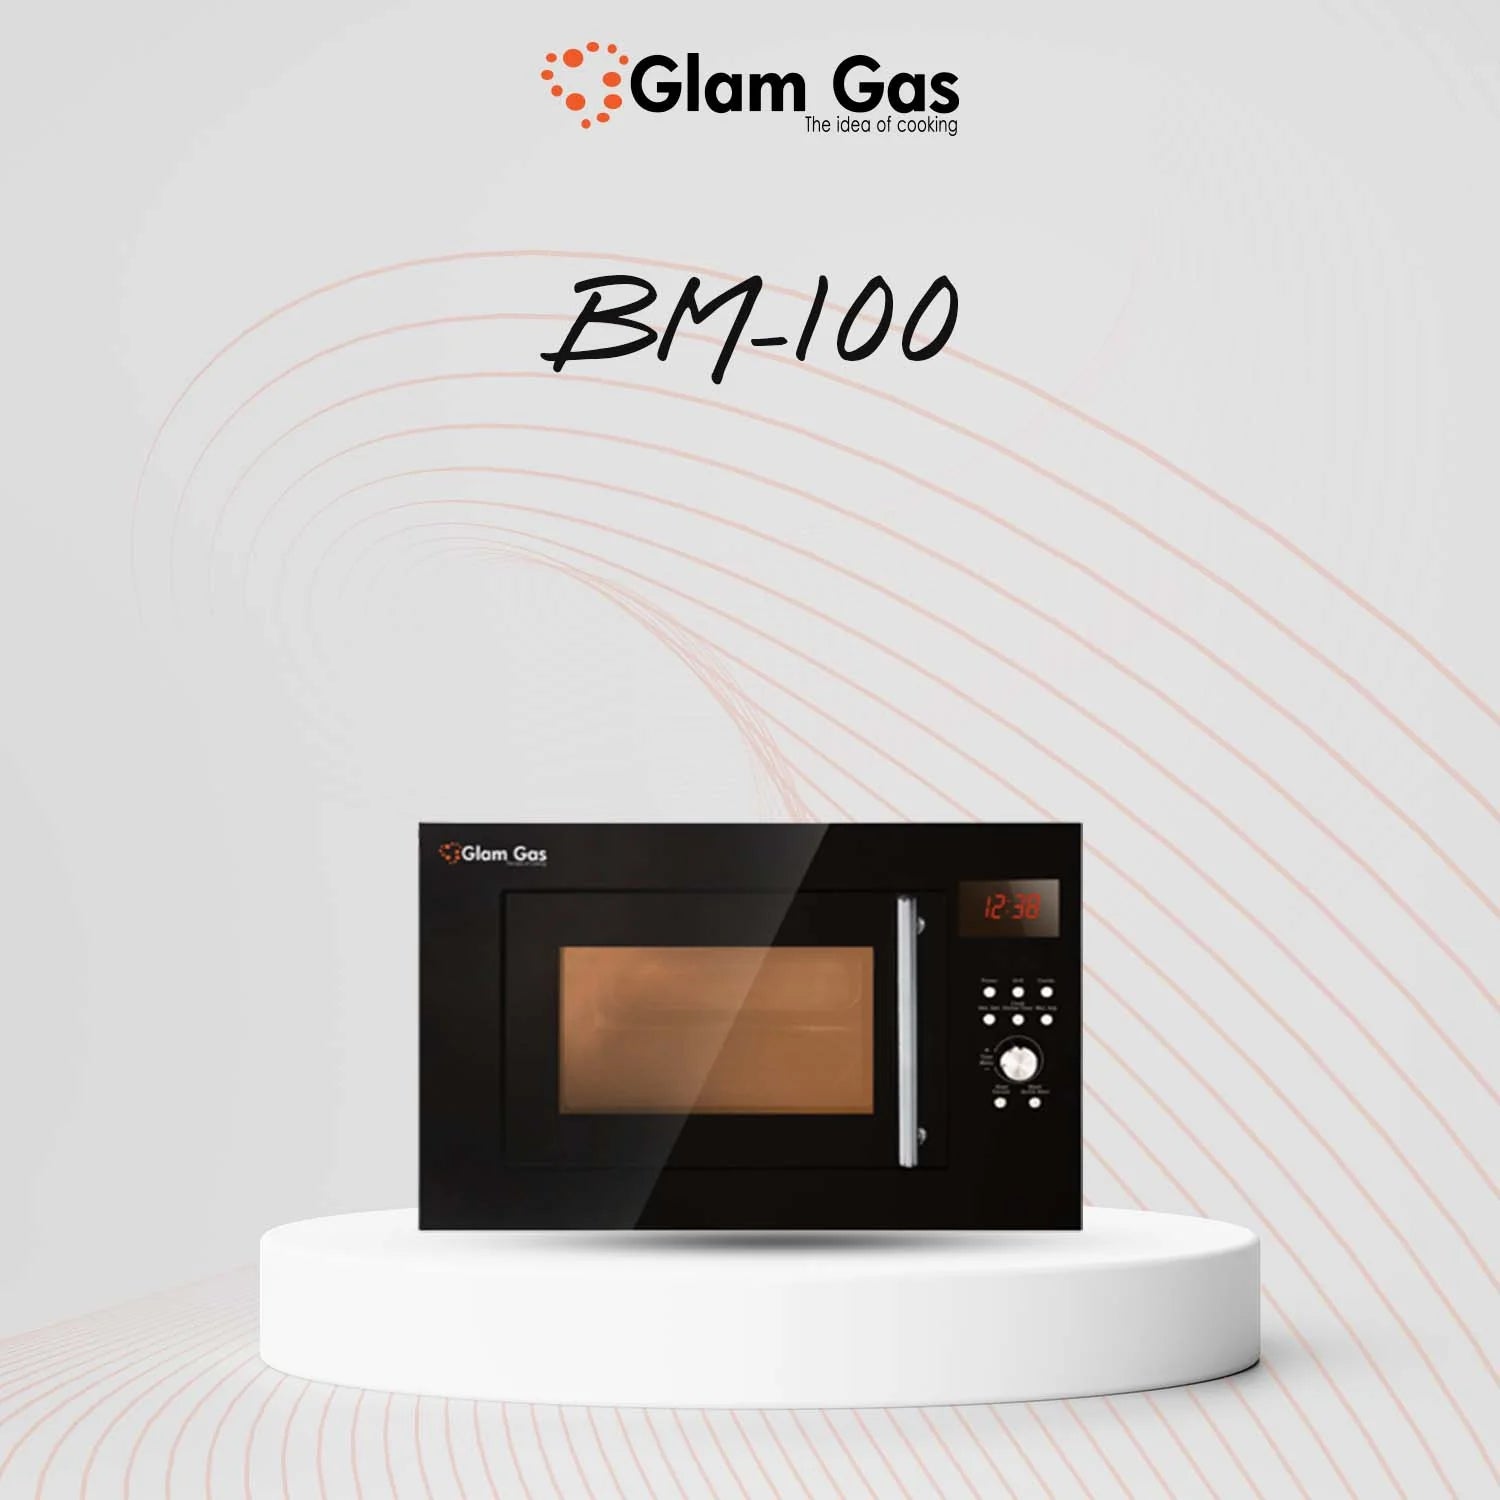 Glam Gas	Microwave Bm100